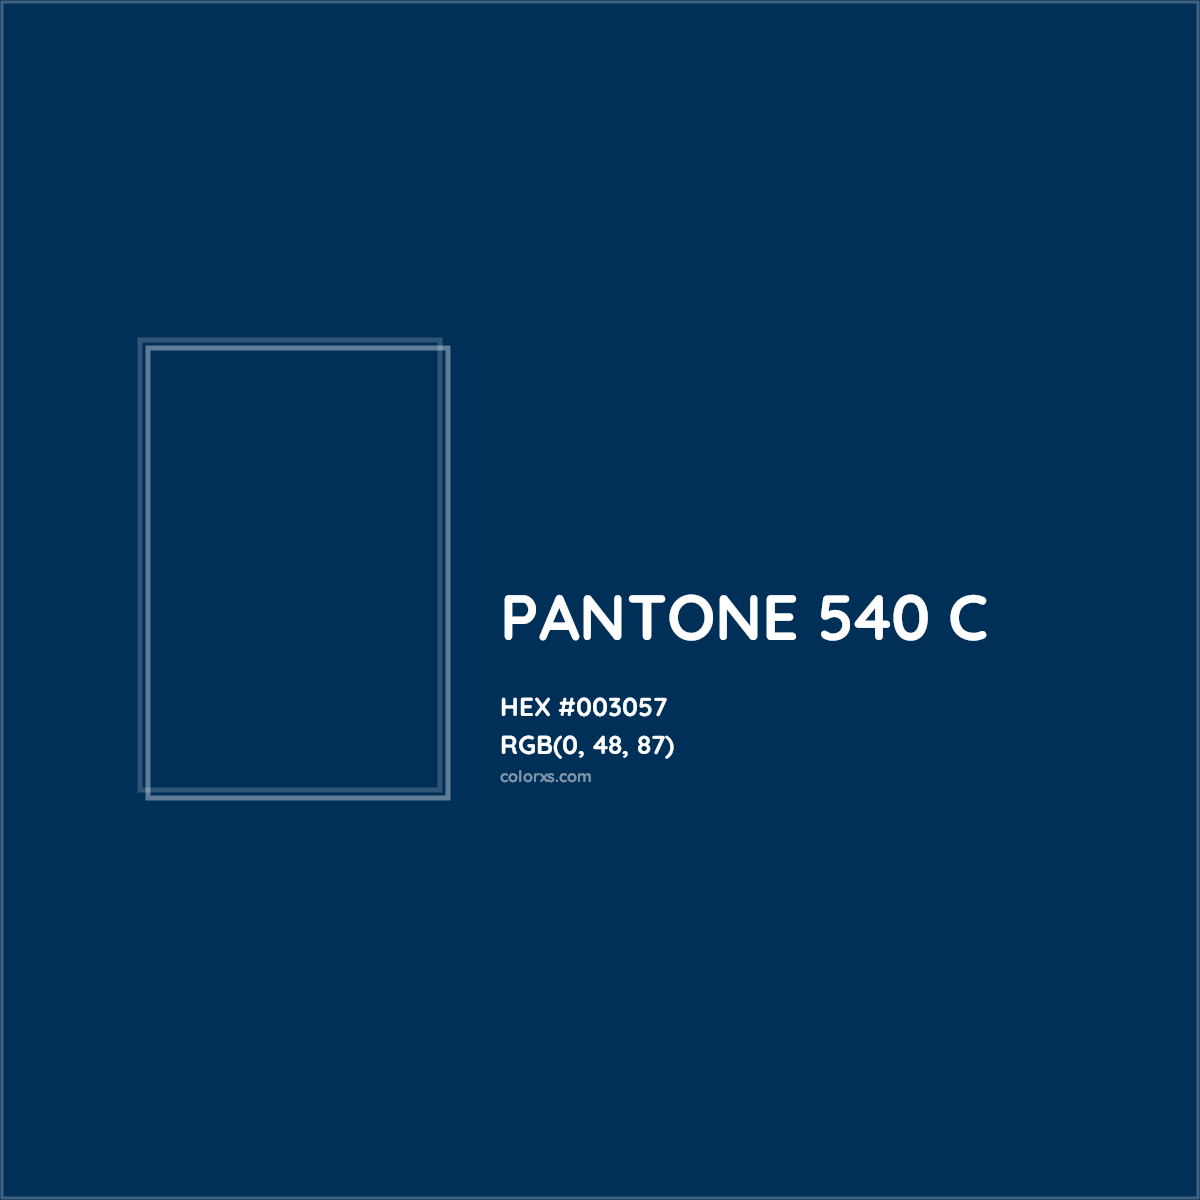 HEX #003057 PANTONE 540 C CMS Pantone PMS - Color Code